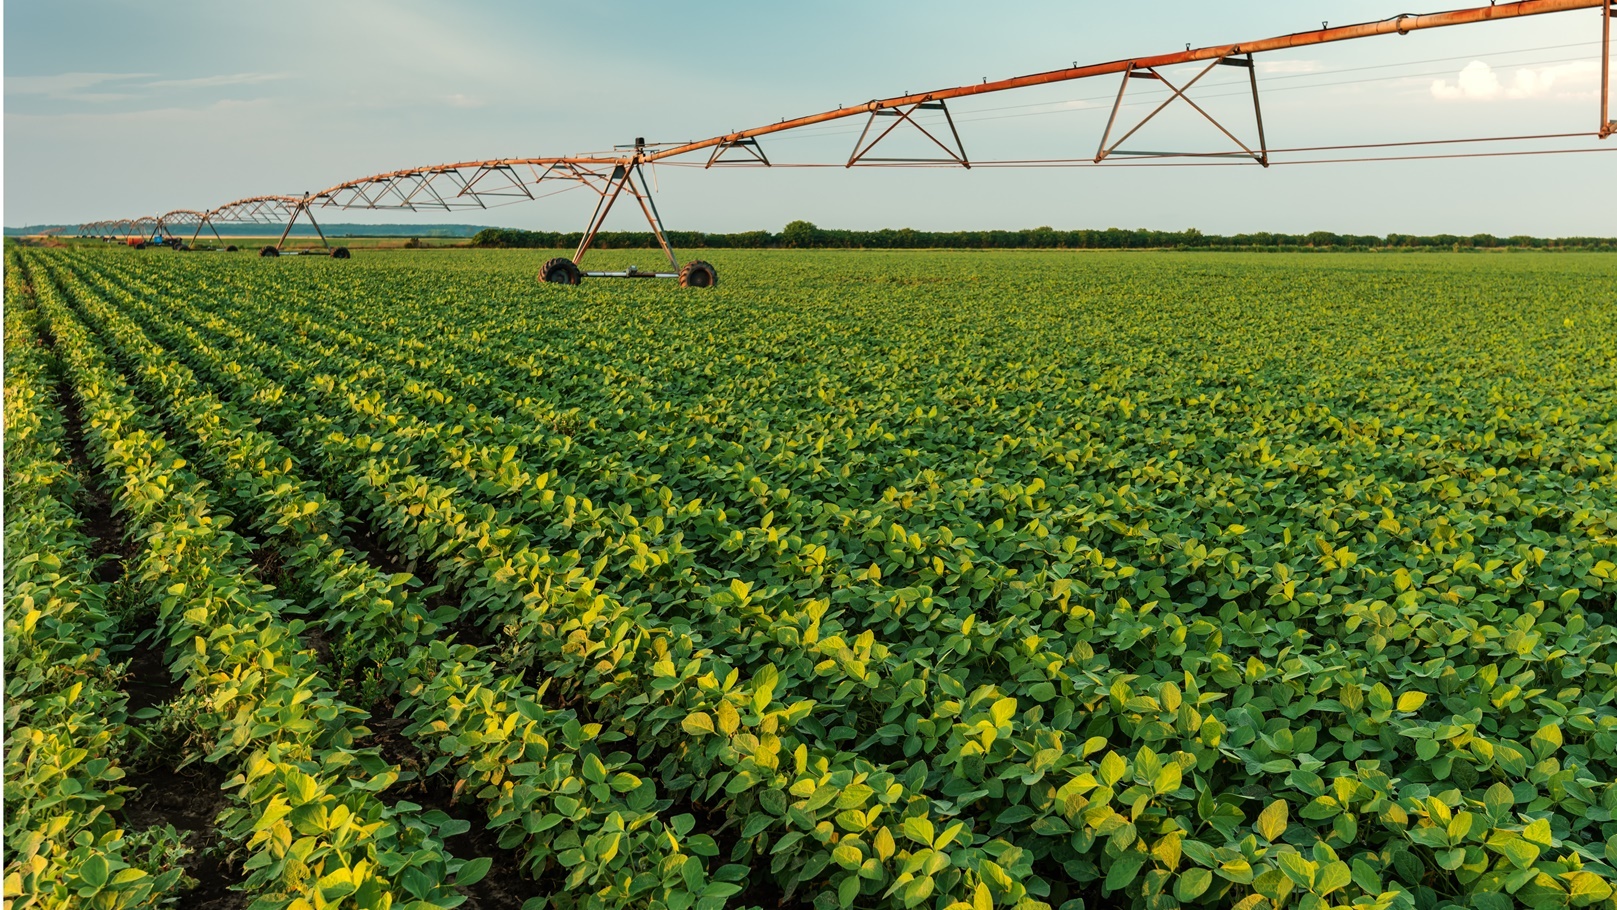 irrigation-sprinklers-in-young-soybean-field-2021-08-26-23-03-11-utc